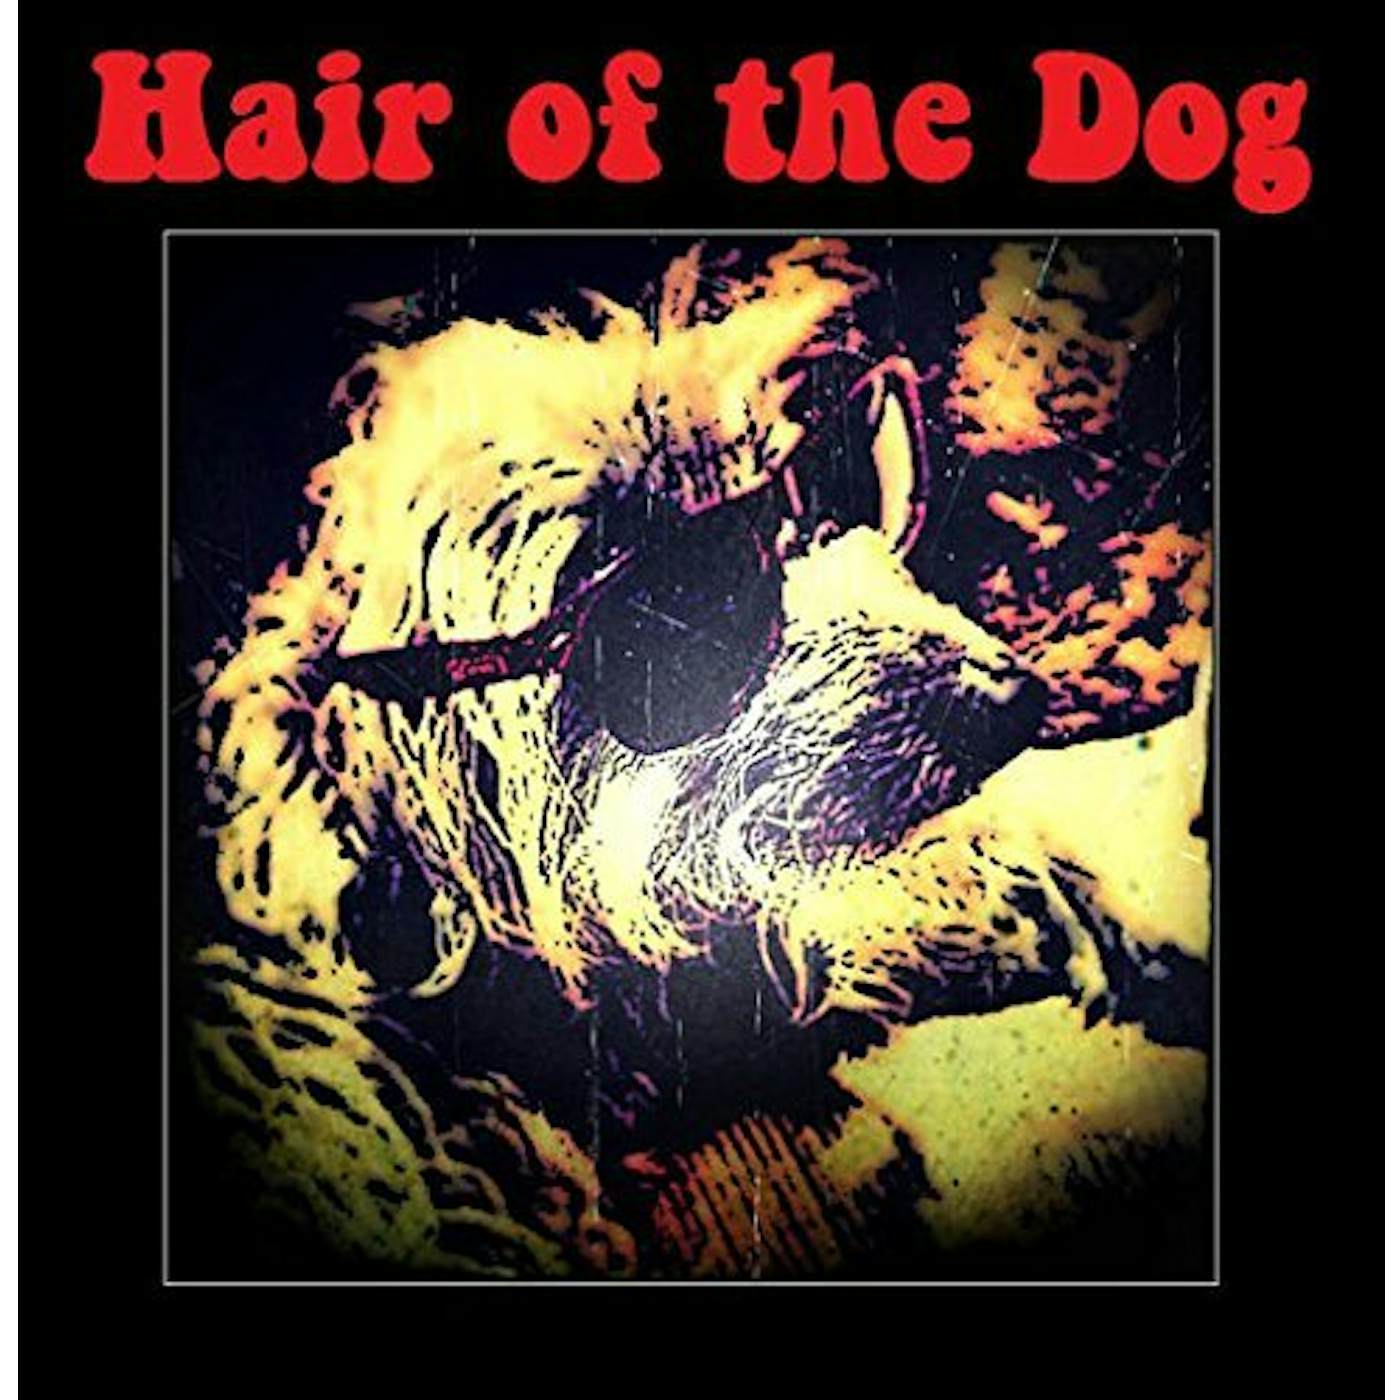 Hair Of The Dog Vinyl Record